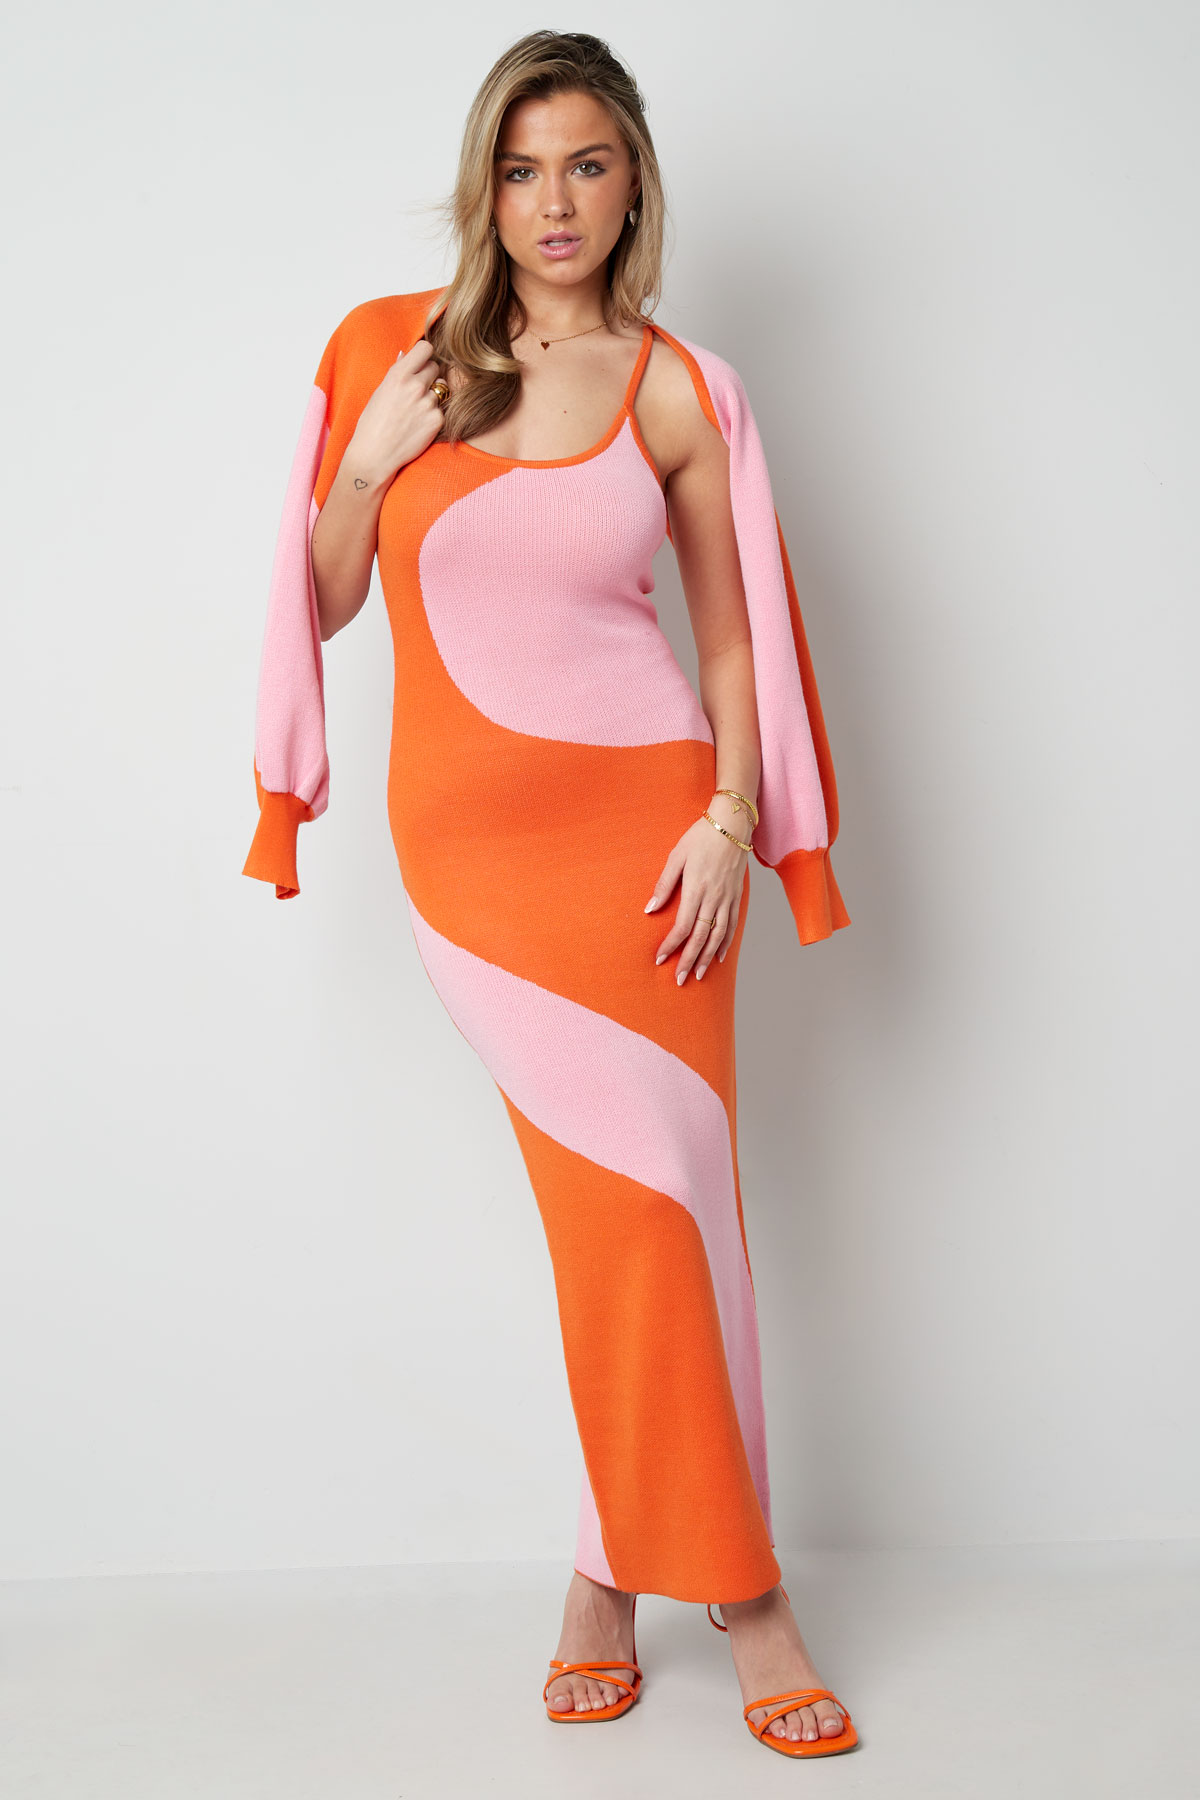 Organik desenli elbise - pembe turuncu Resim6